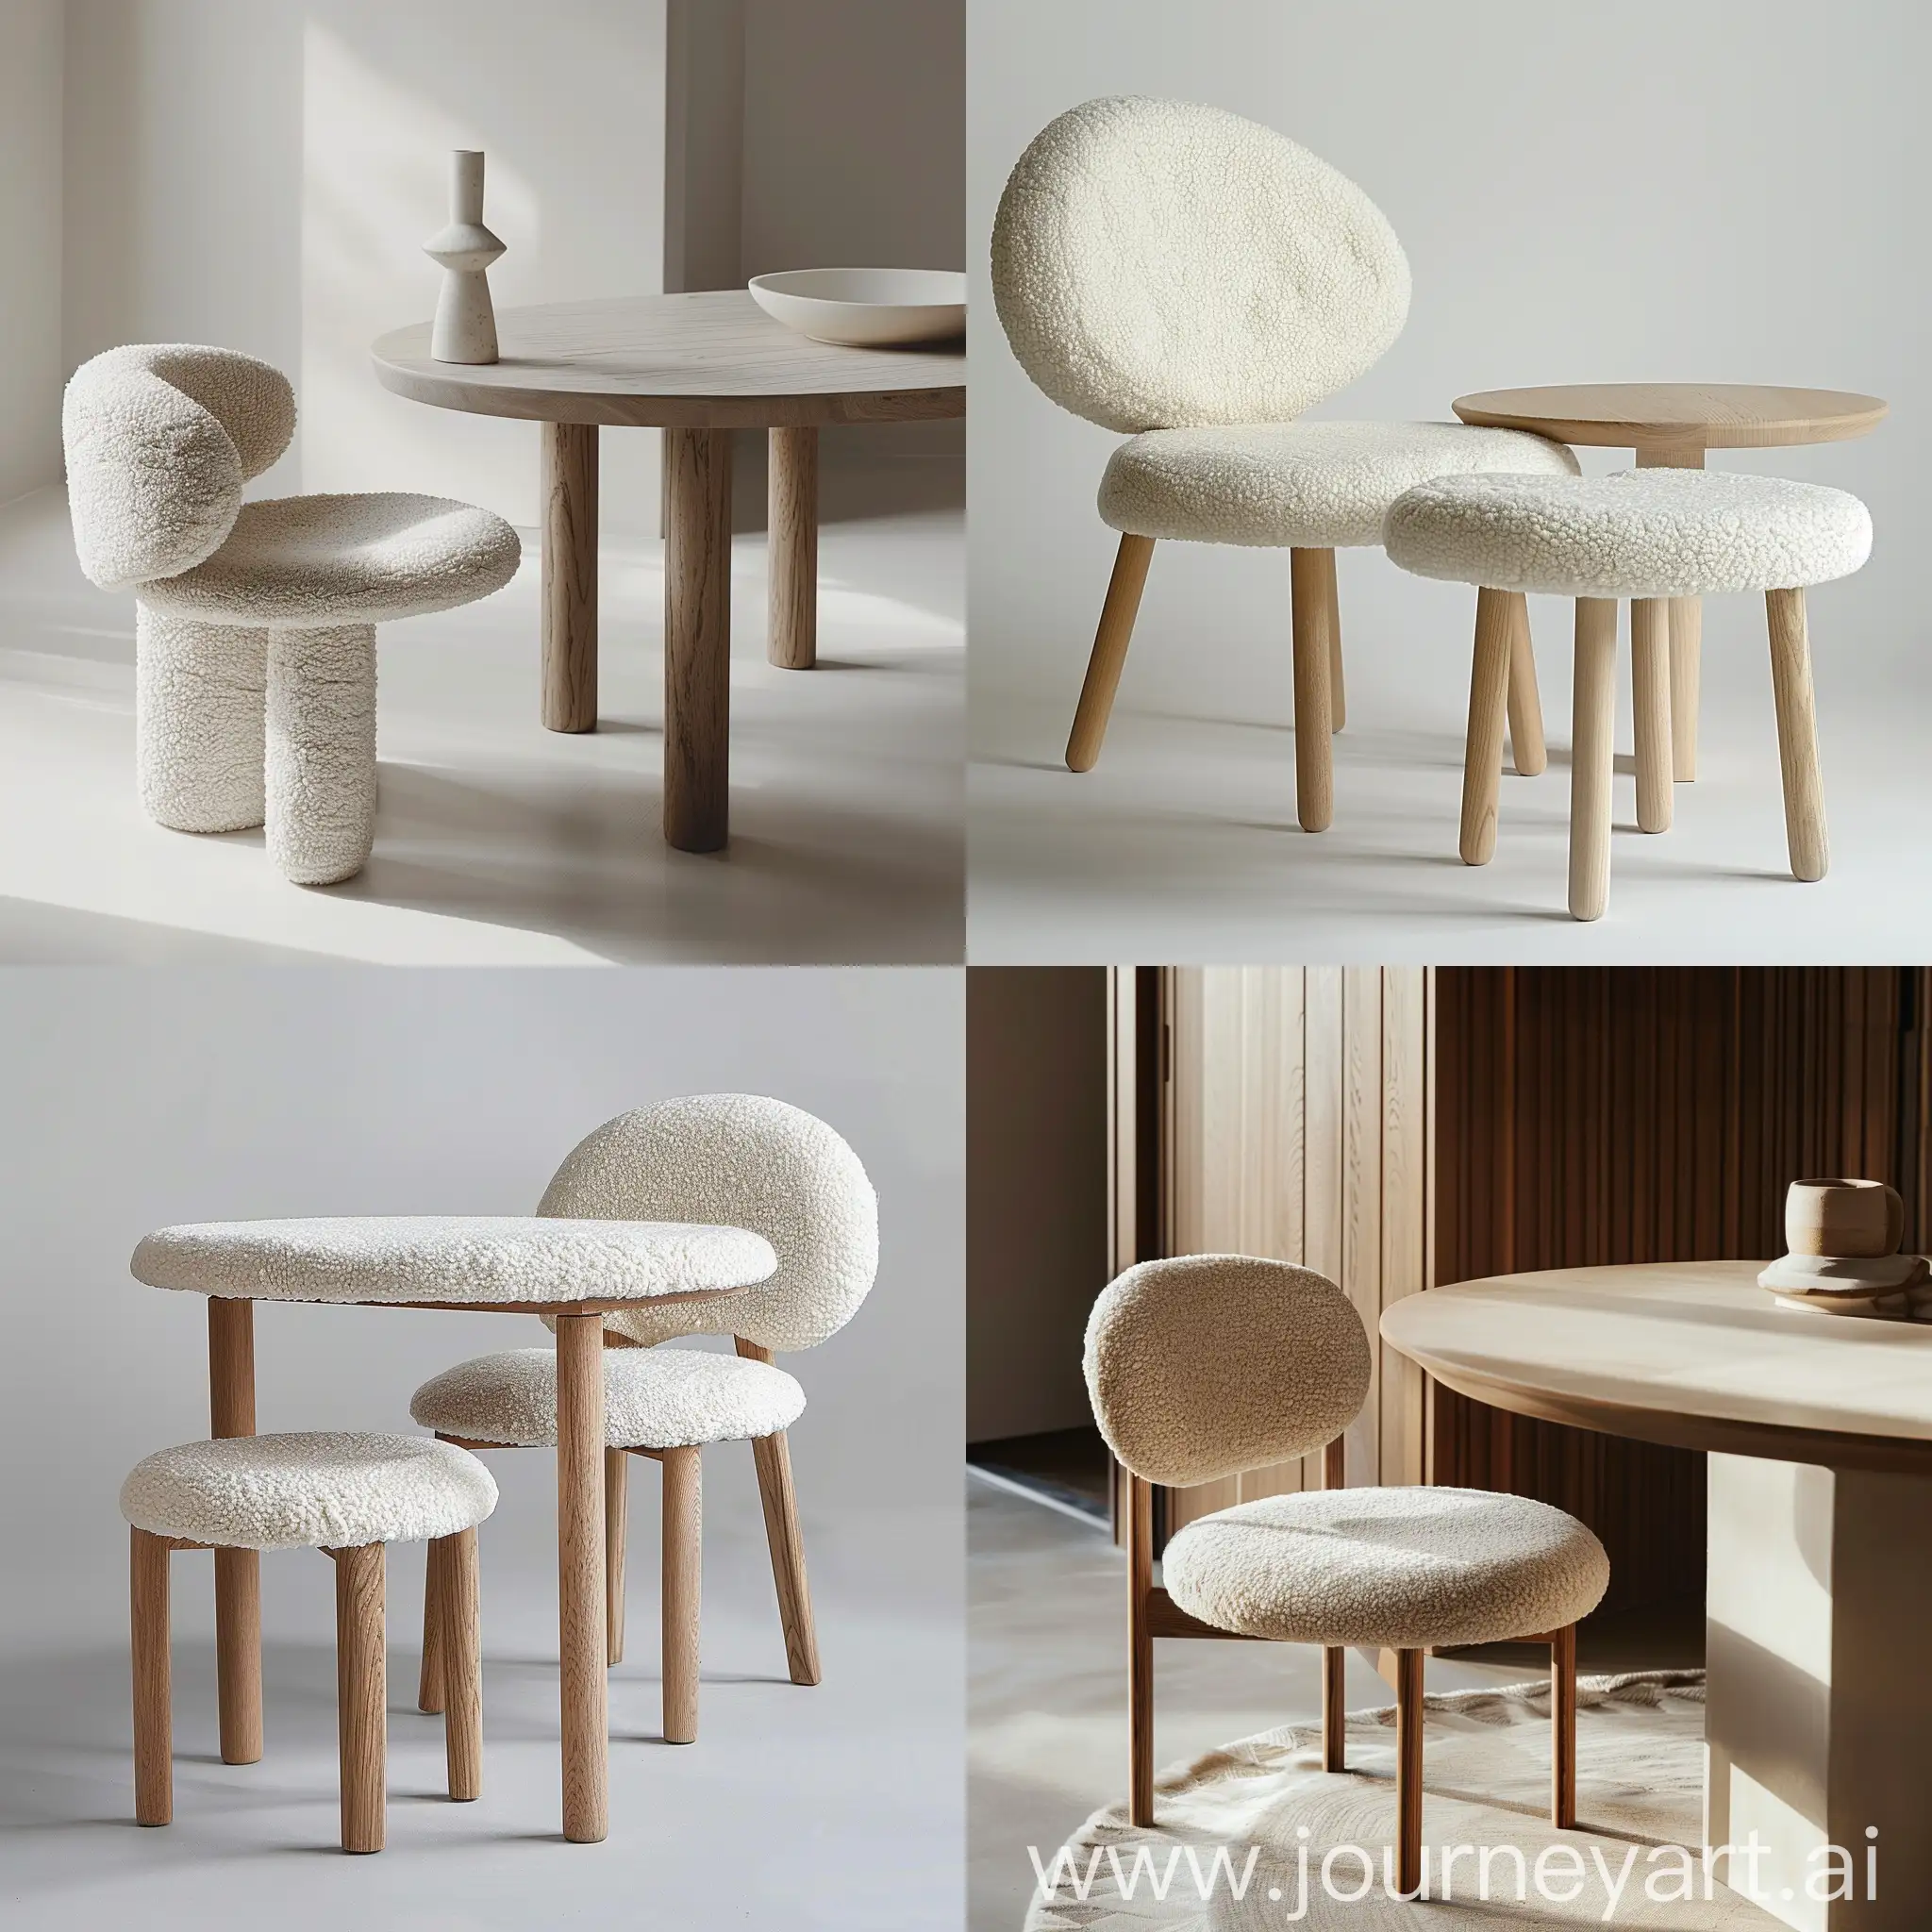 Japandi-Dining-Set-with-Boucl-Chairs-Minimalistic-Japanese-and-Scandinavian-Style